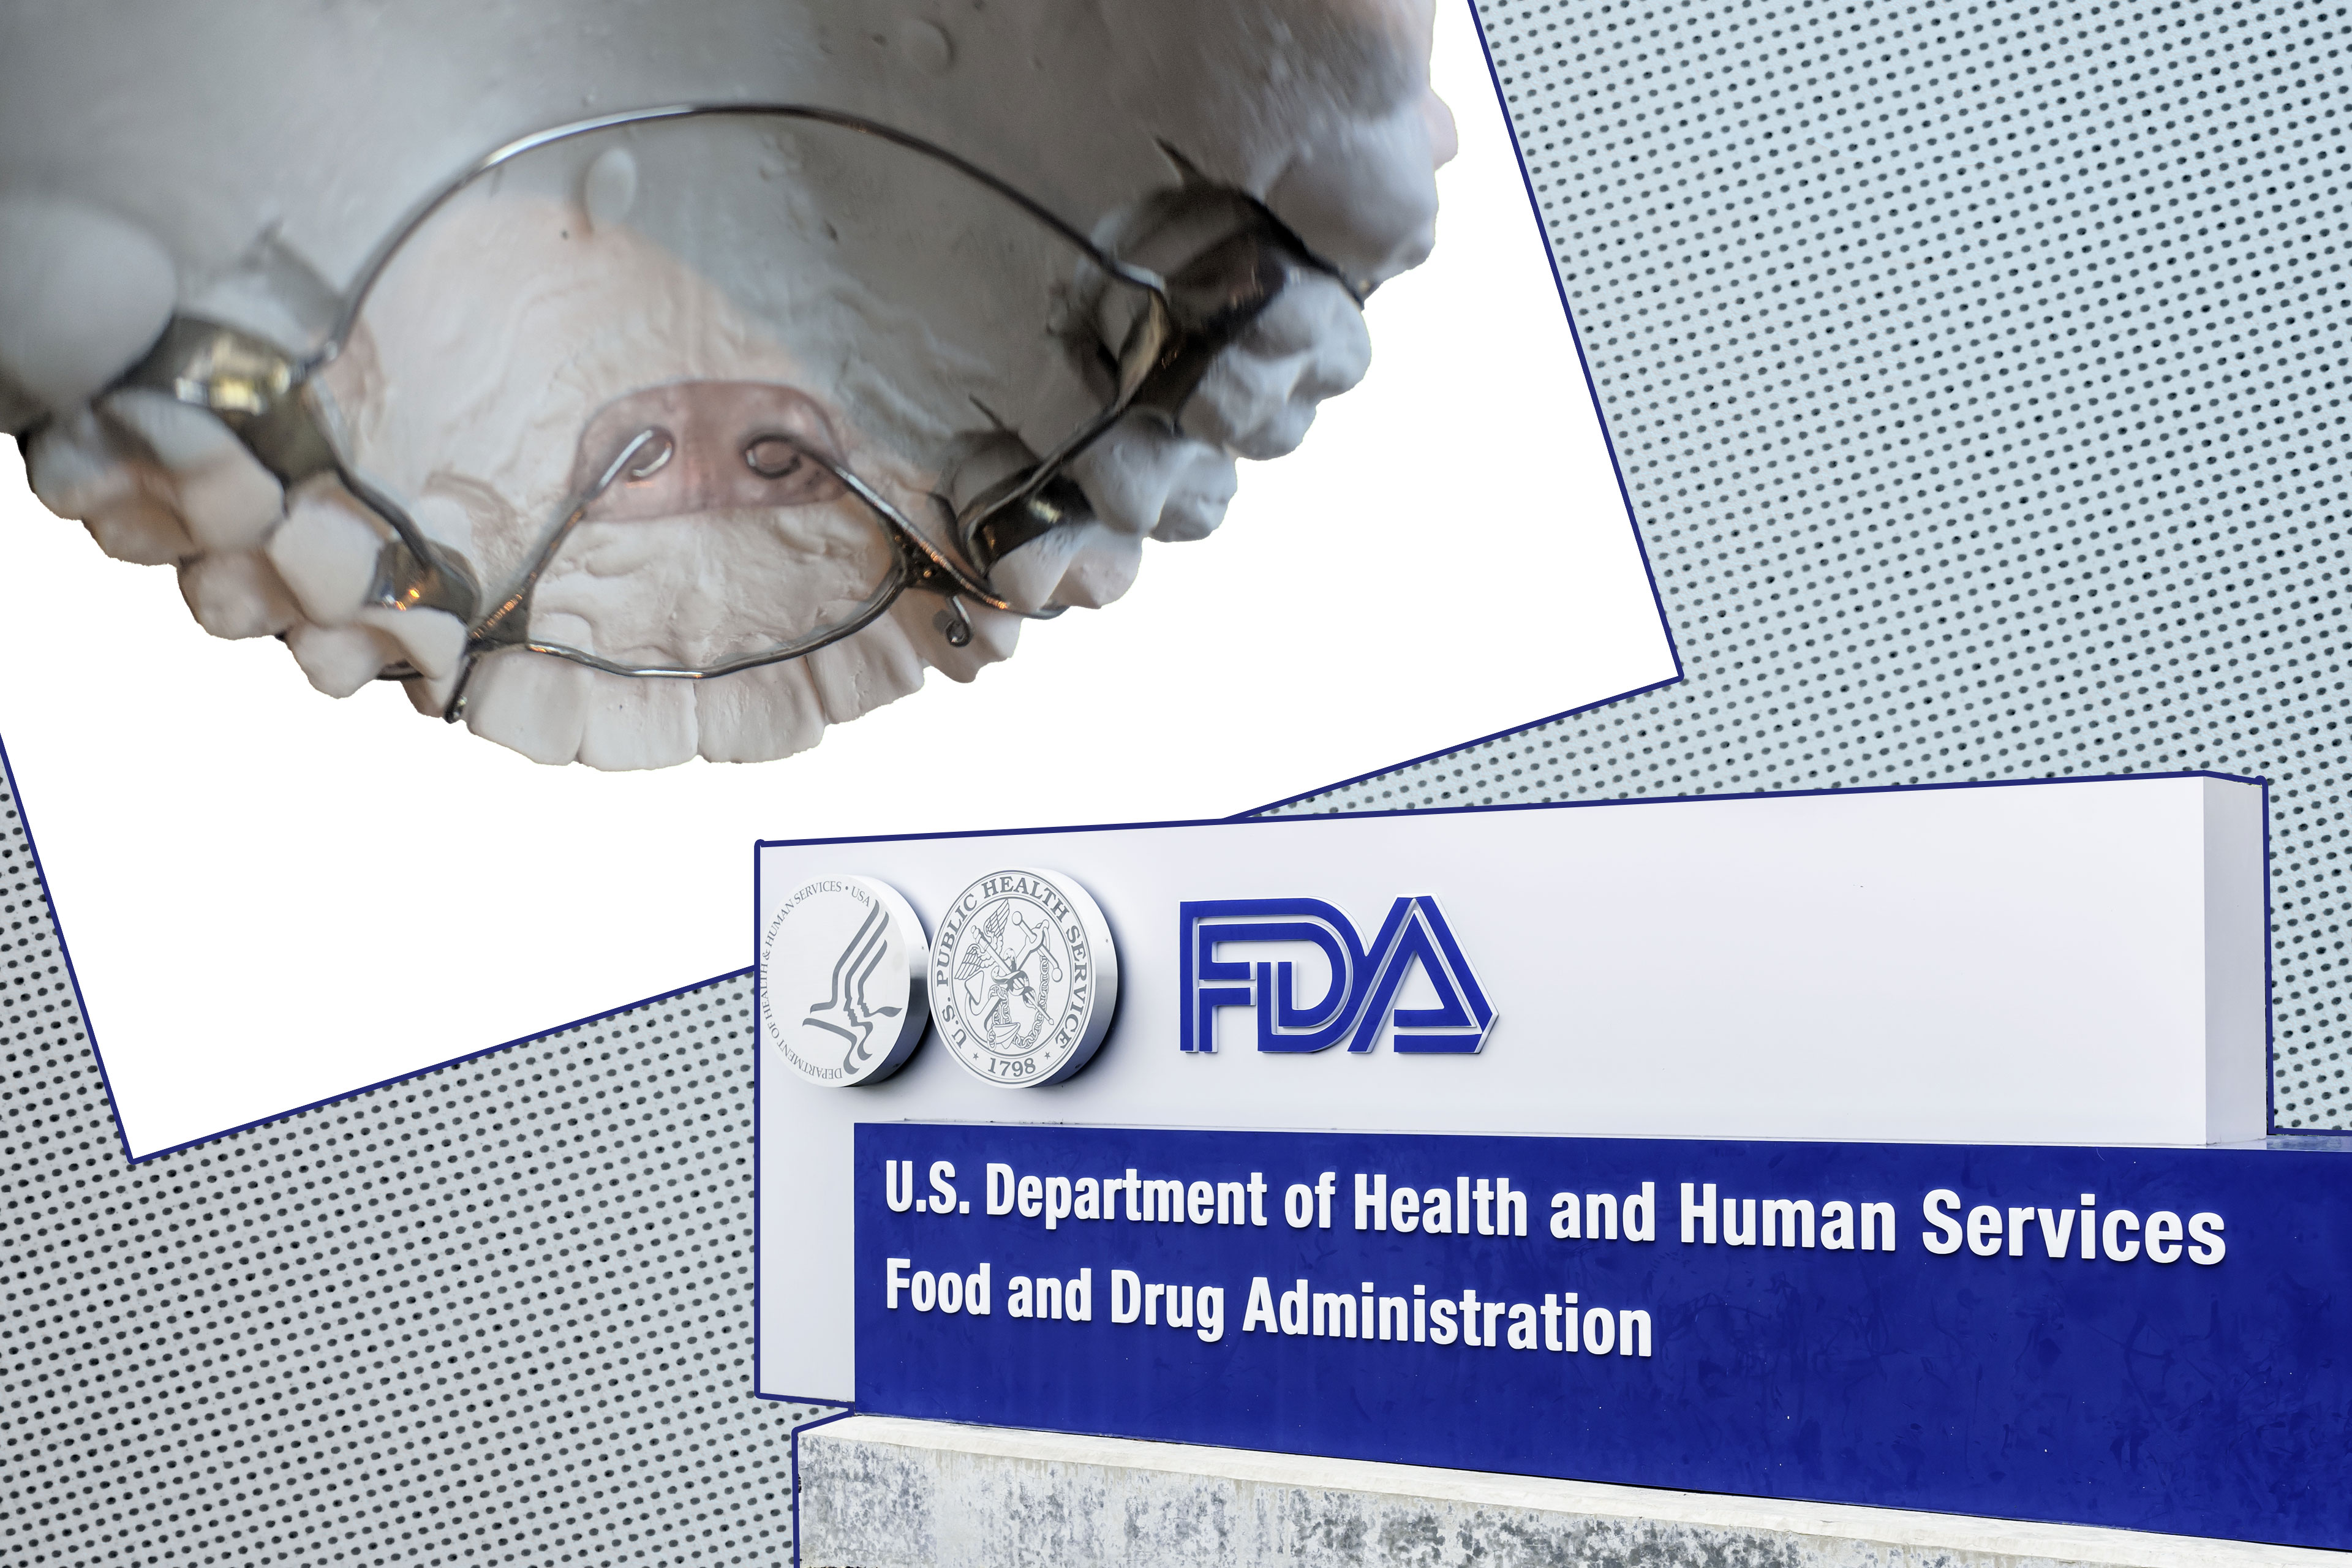 FDA Evaluates ‘Safety Concerns’ Over Dental Devices Featured in KHN-CBS Investigation